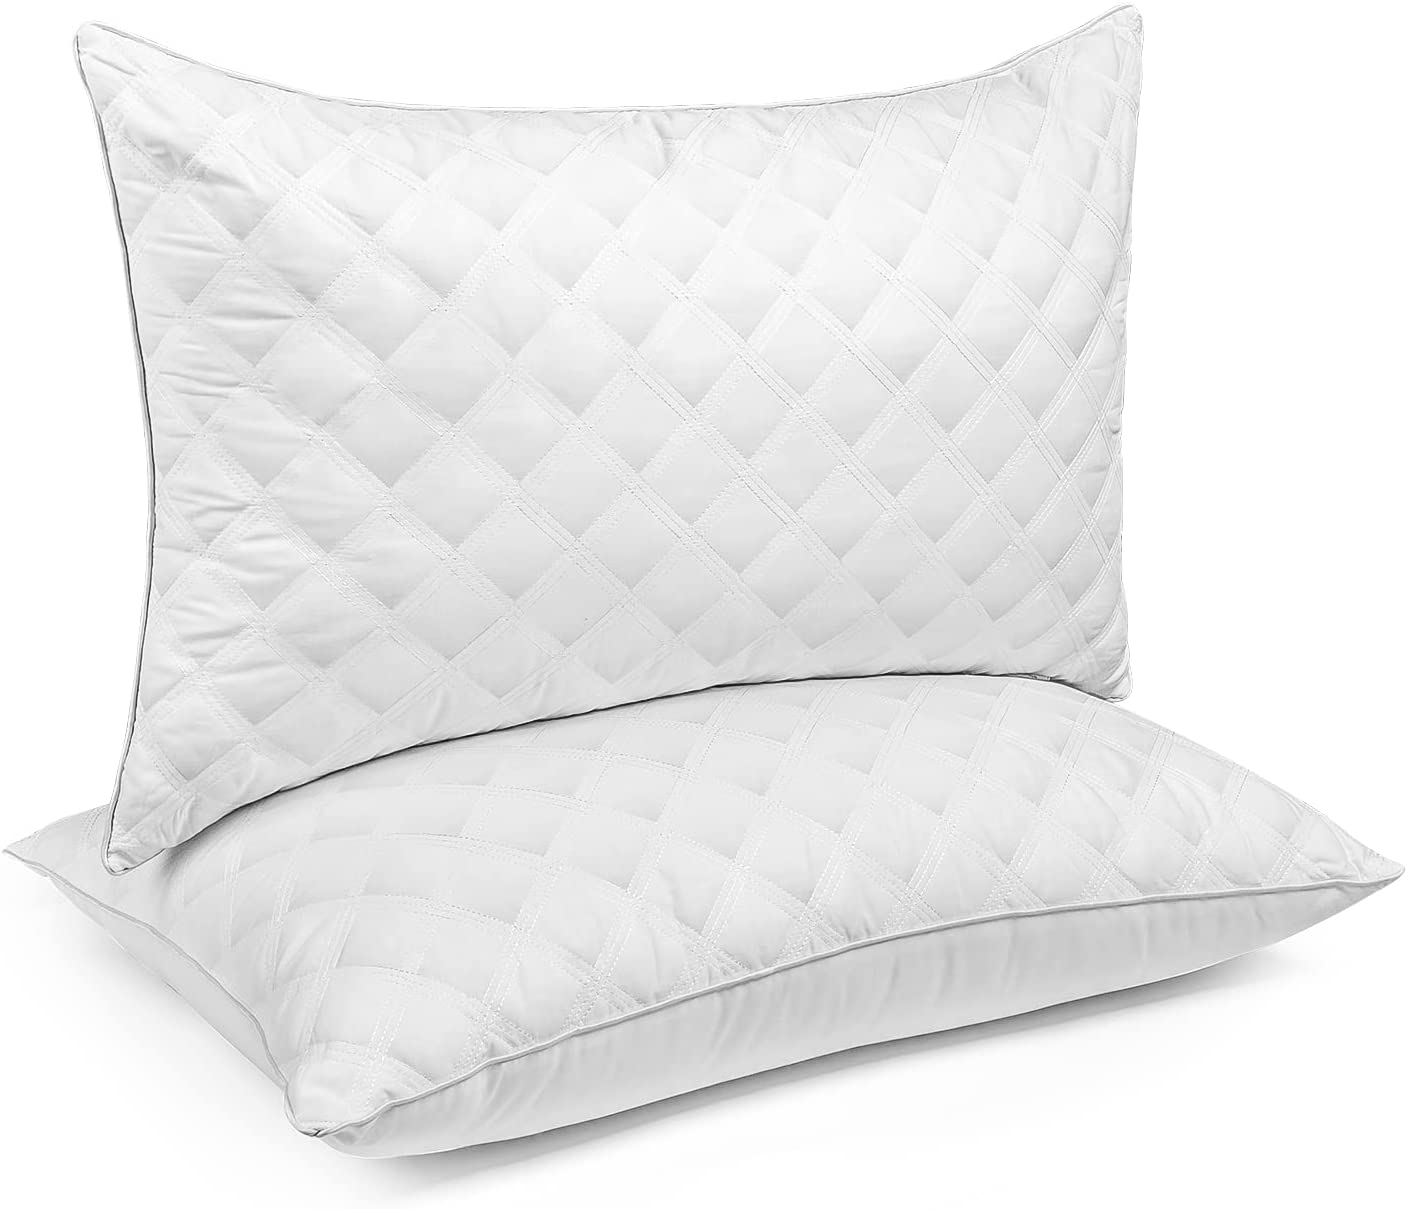 Beckham Hotel Pillow WholeSale - Price List, Bulk Buy at